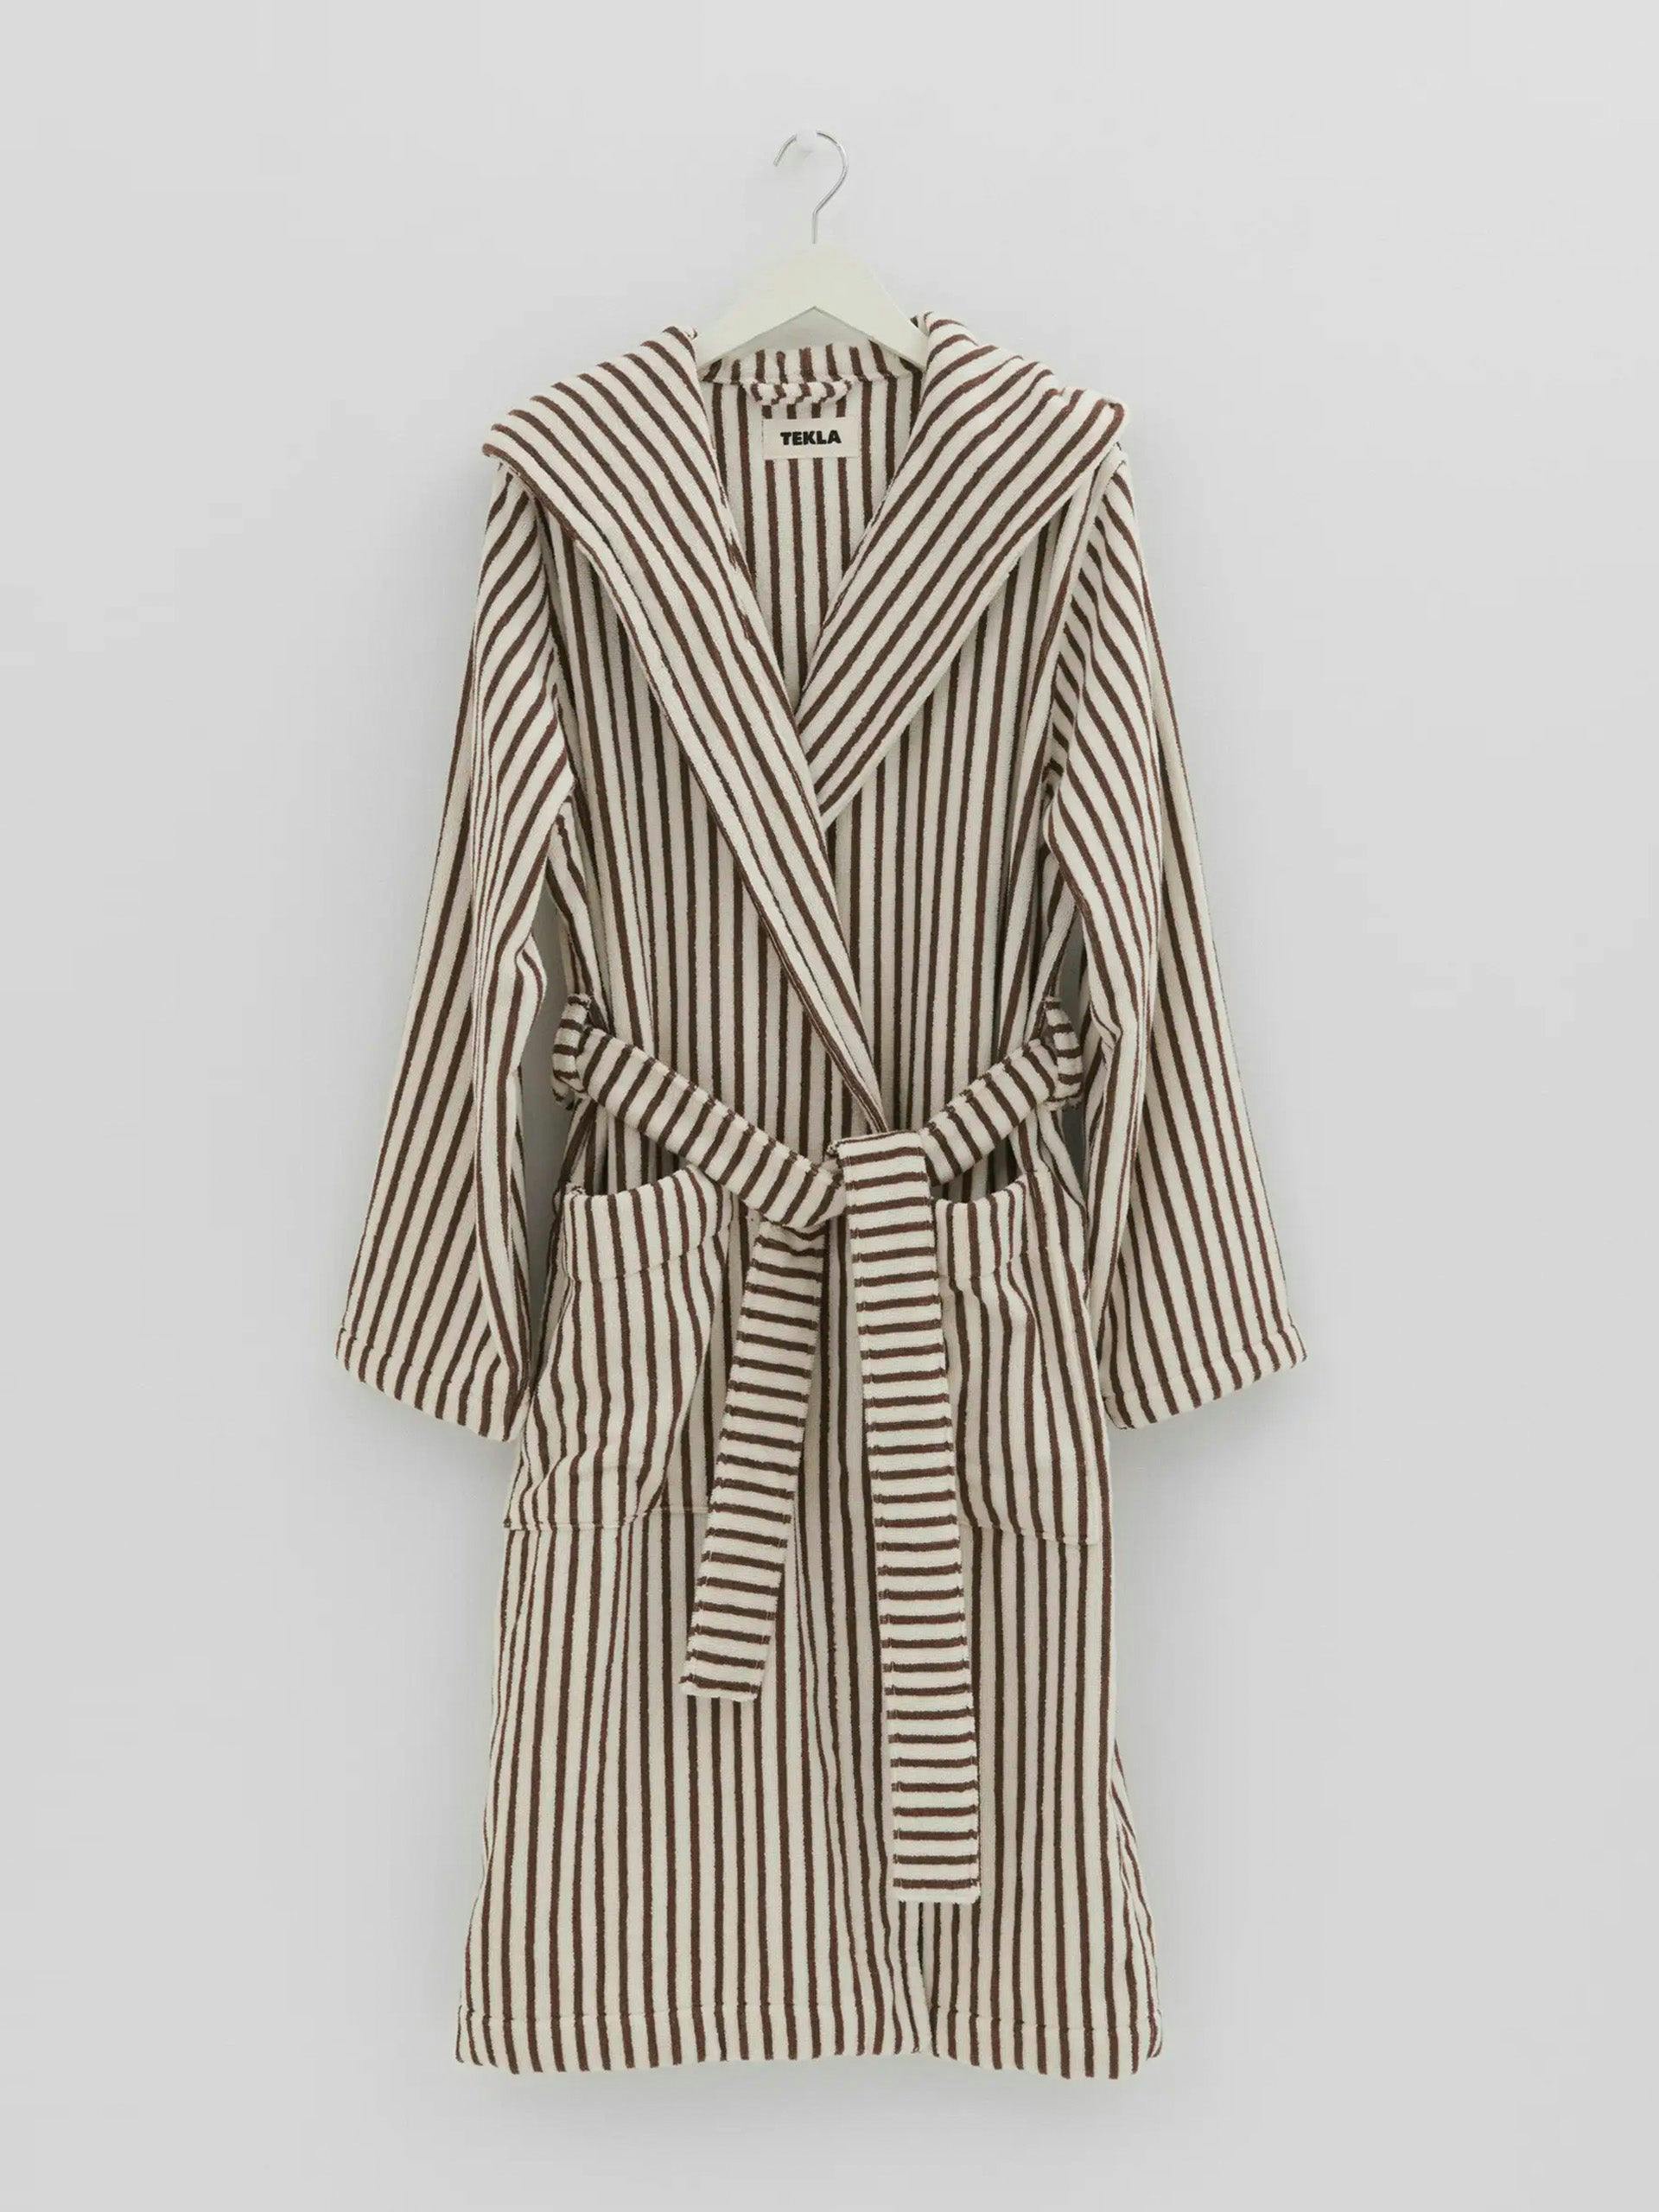 Kodiak Stripes hooded bathrobe